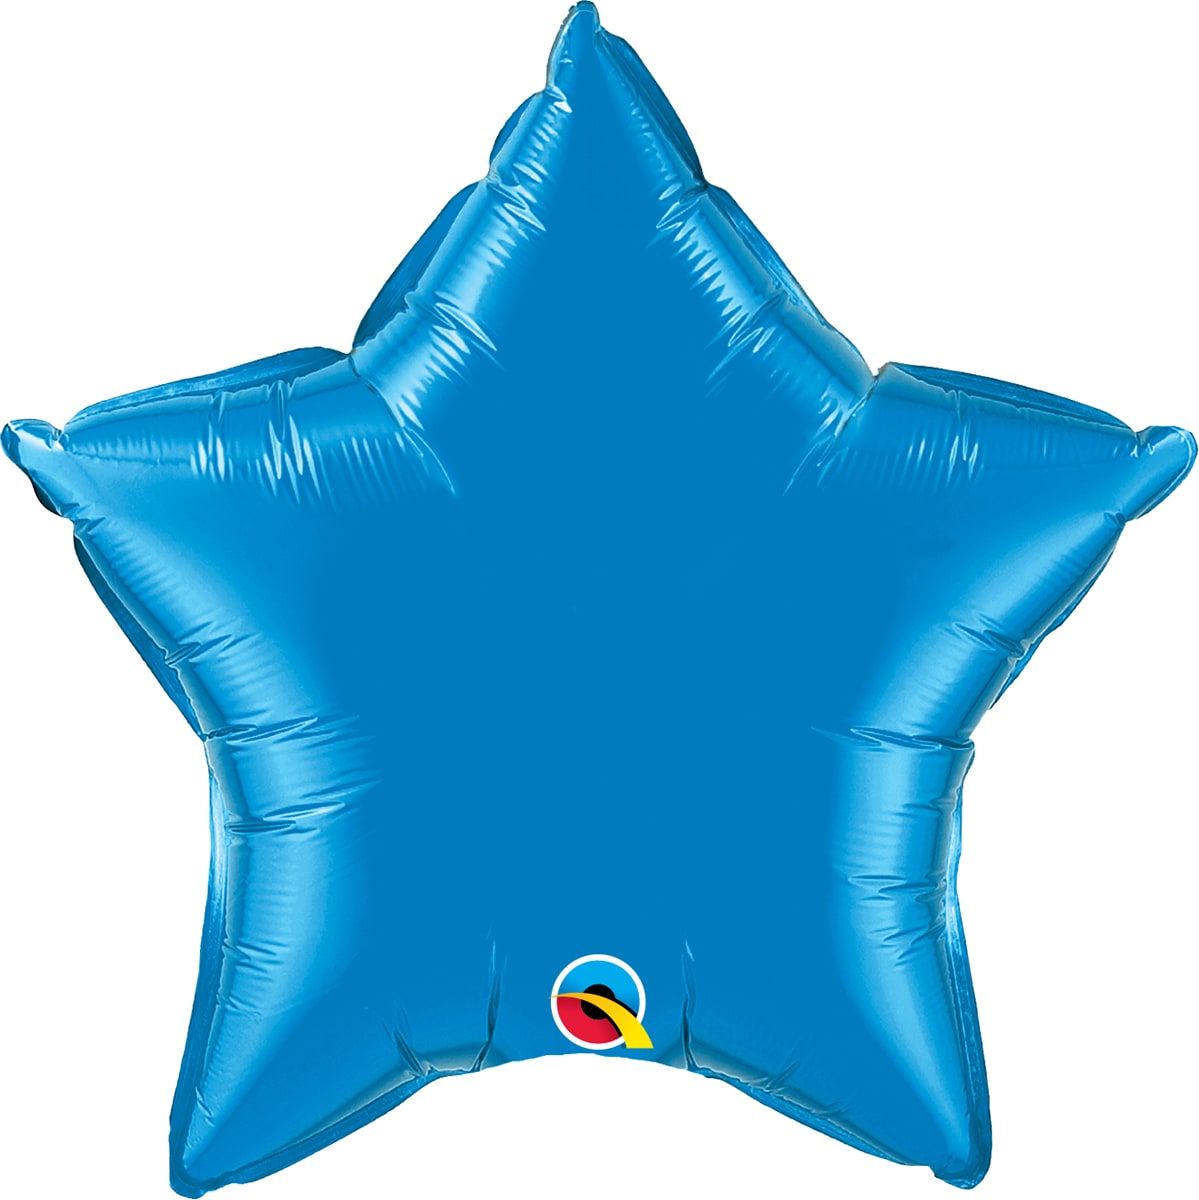 Folieballon stervorm sapphire blue